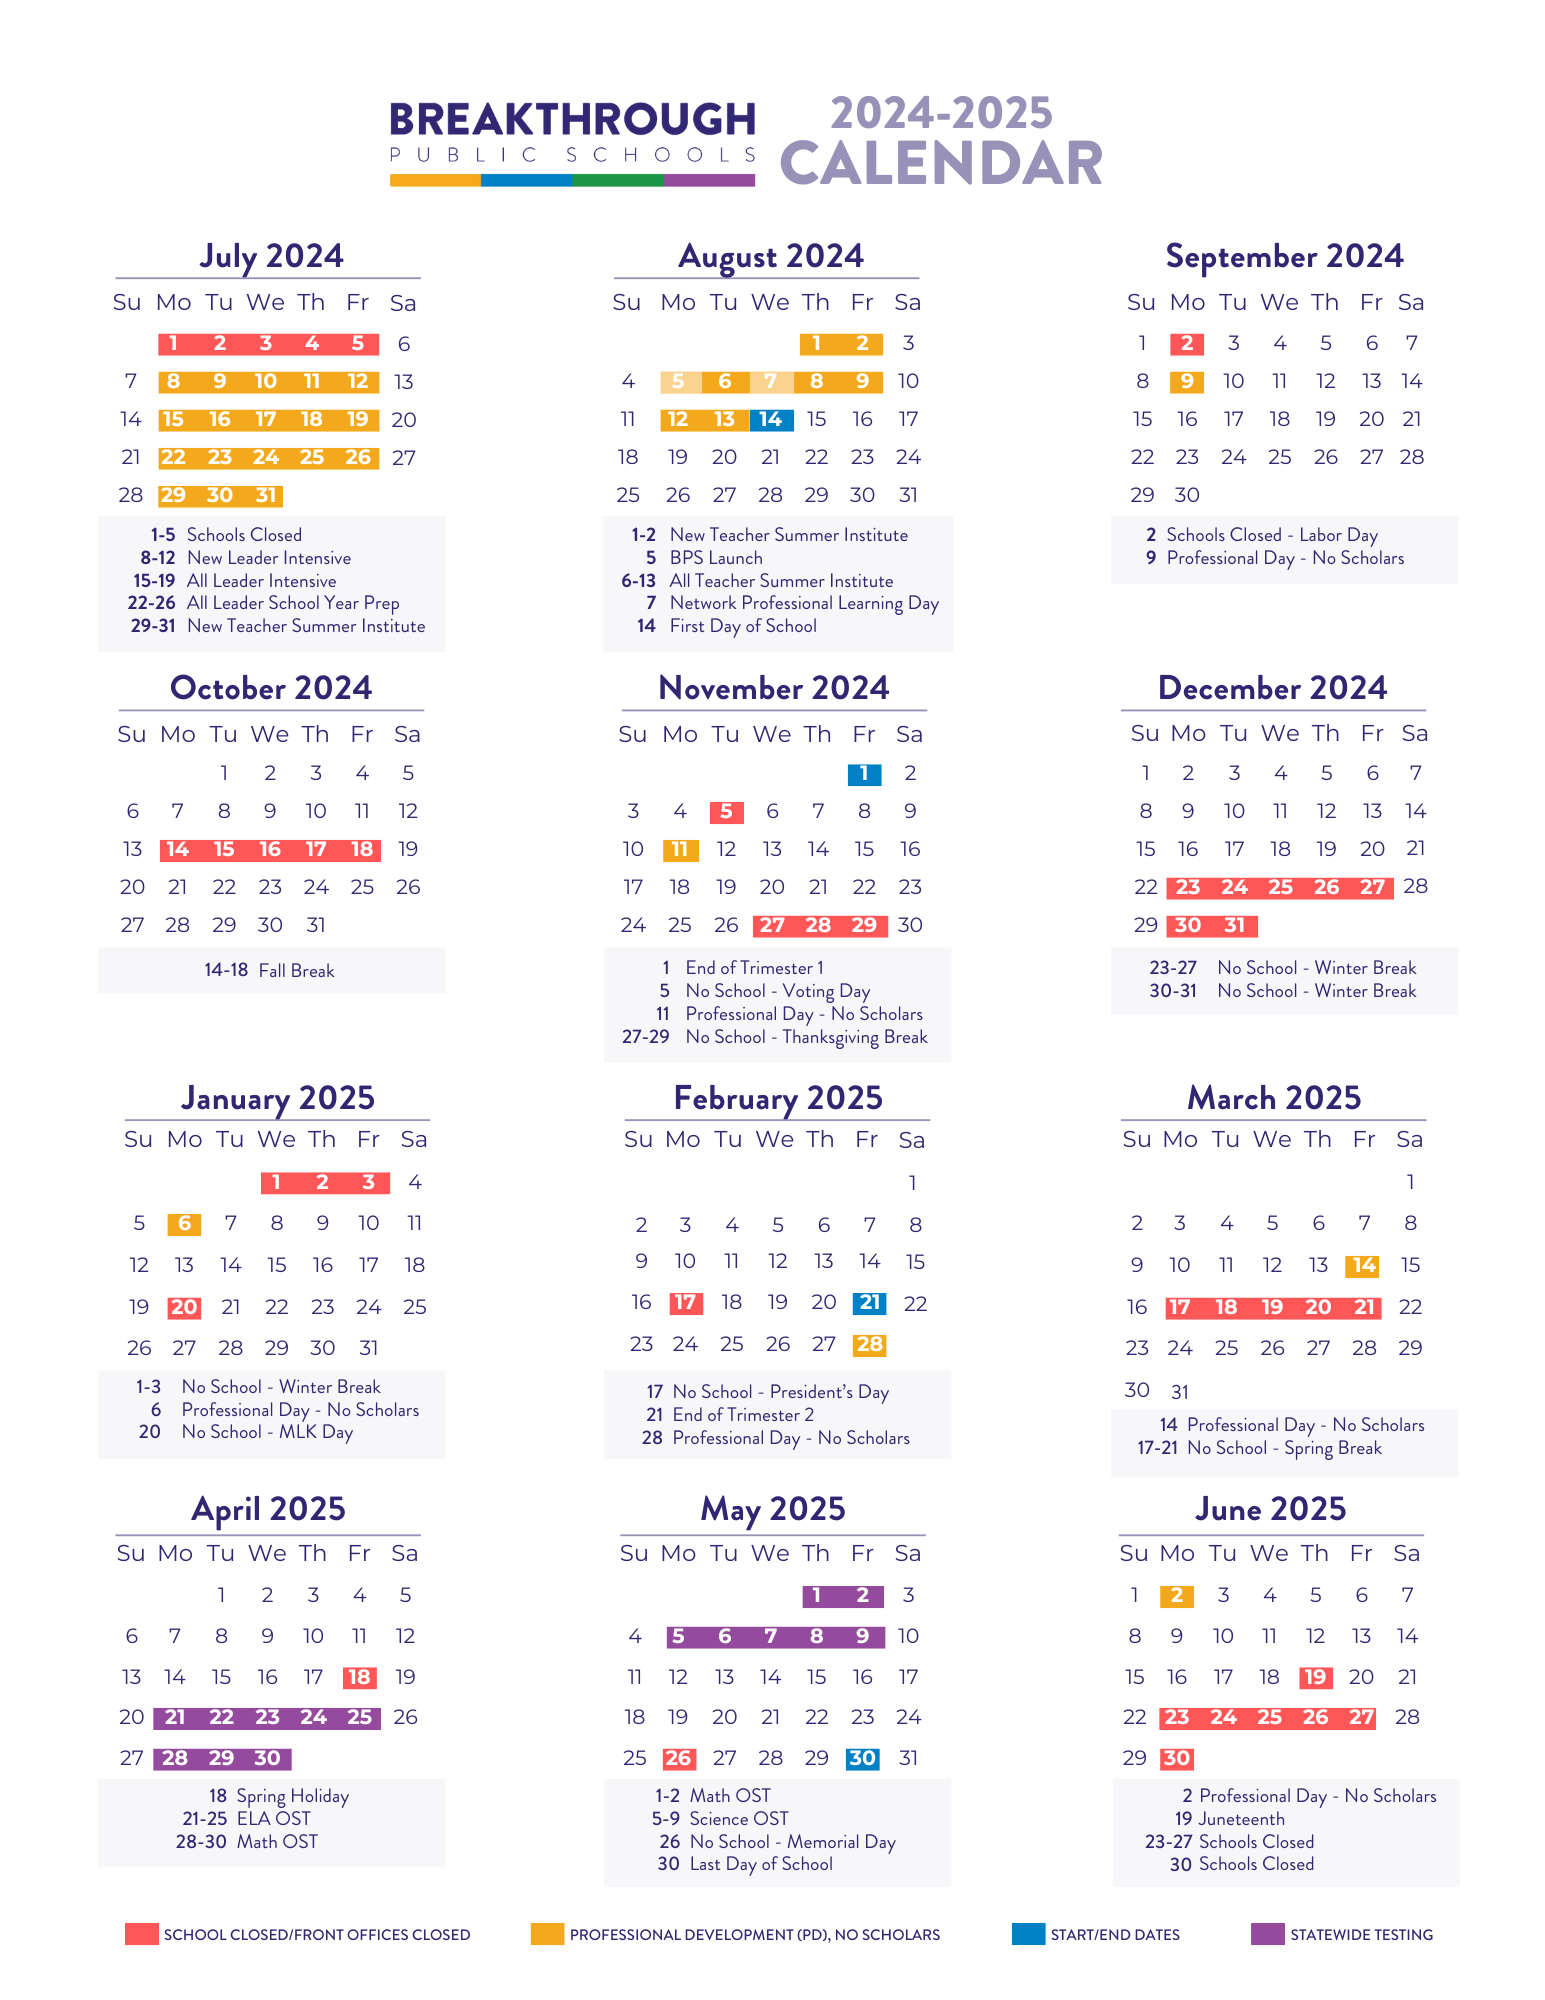 BPS 24-25 School Calendar